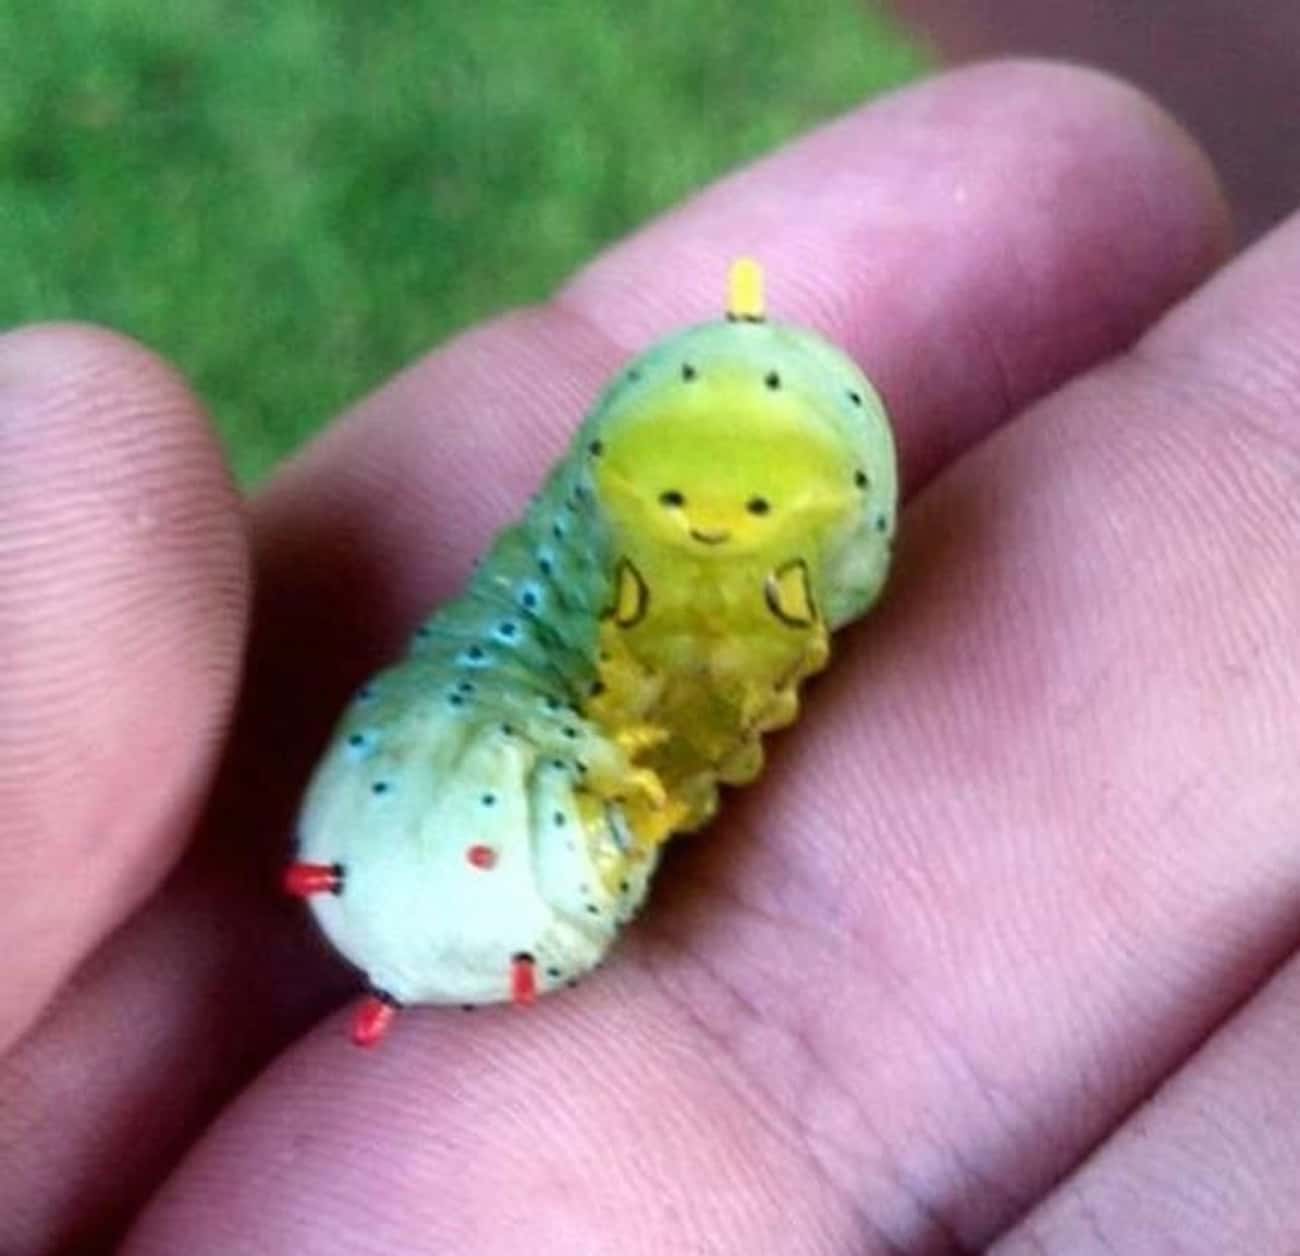 This Caterpillar